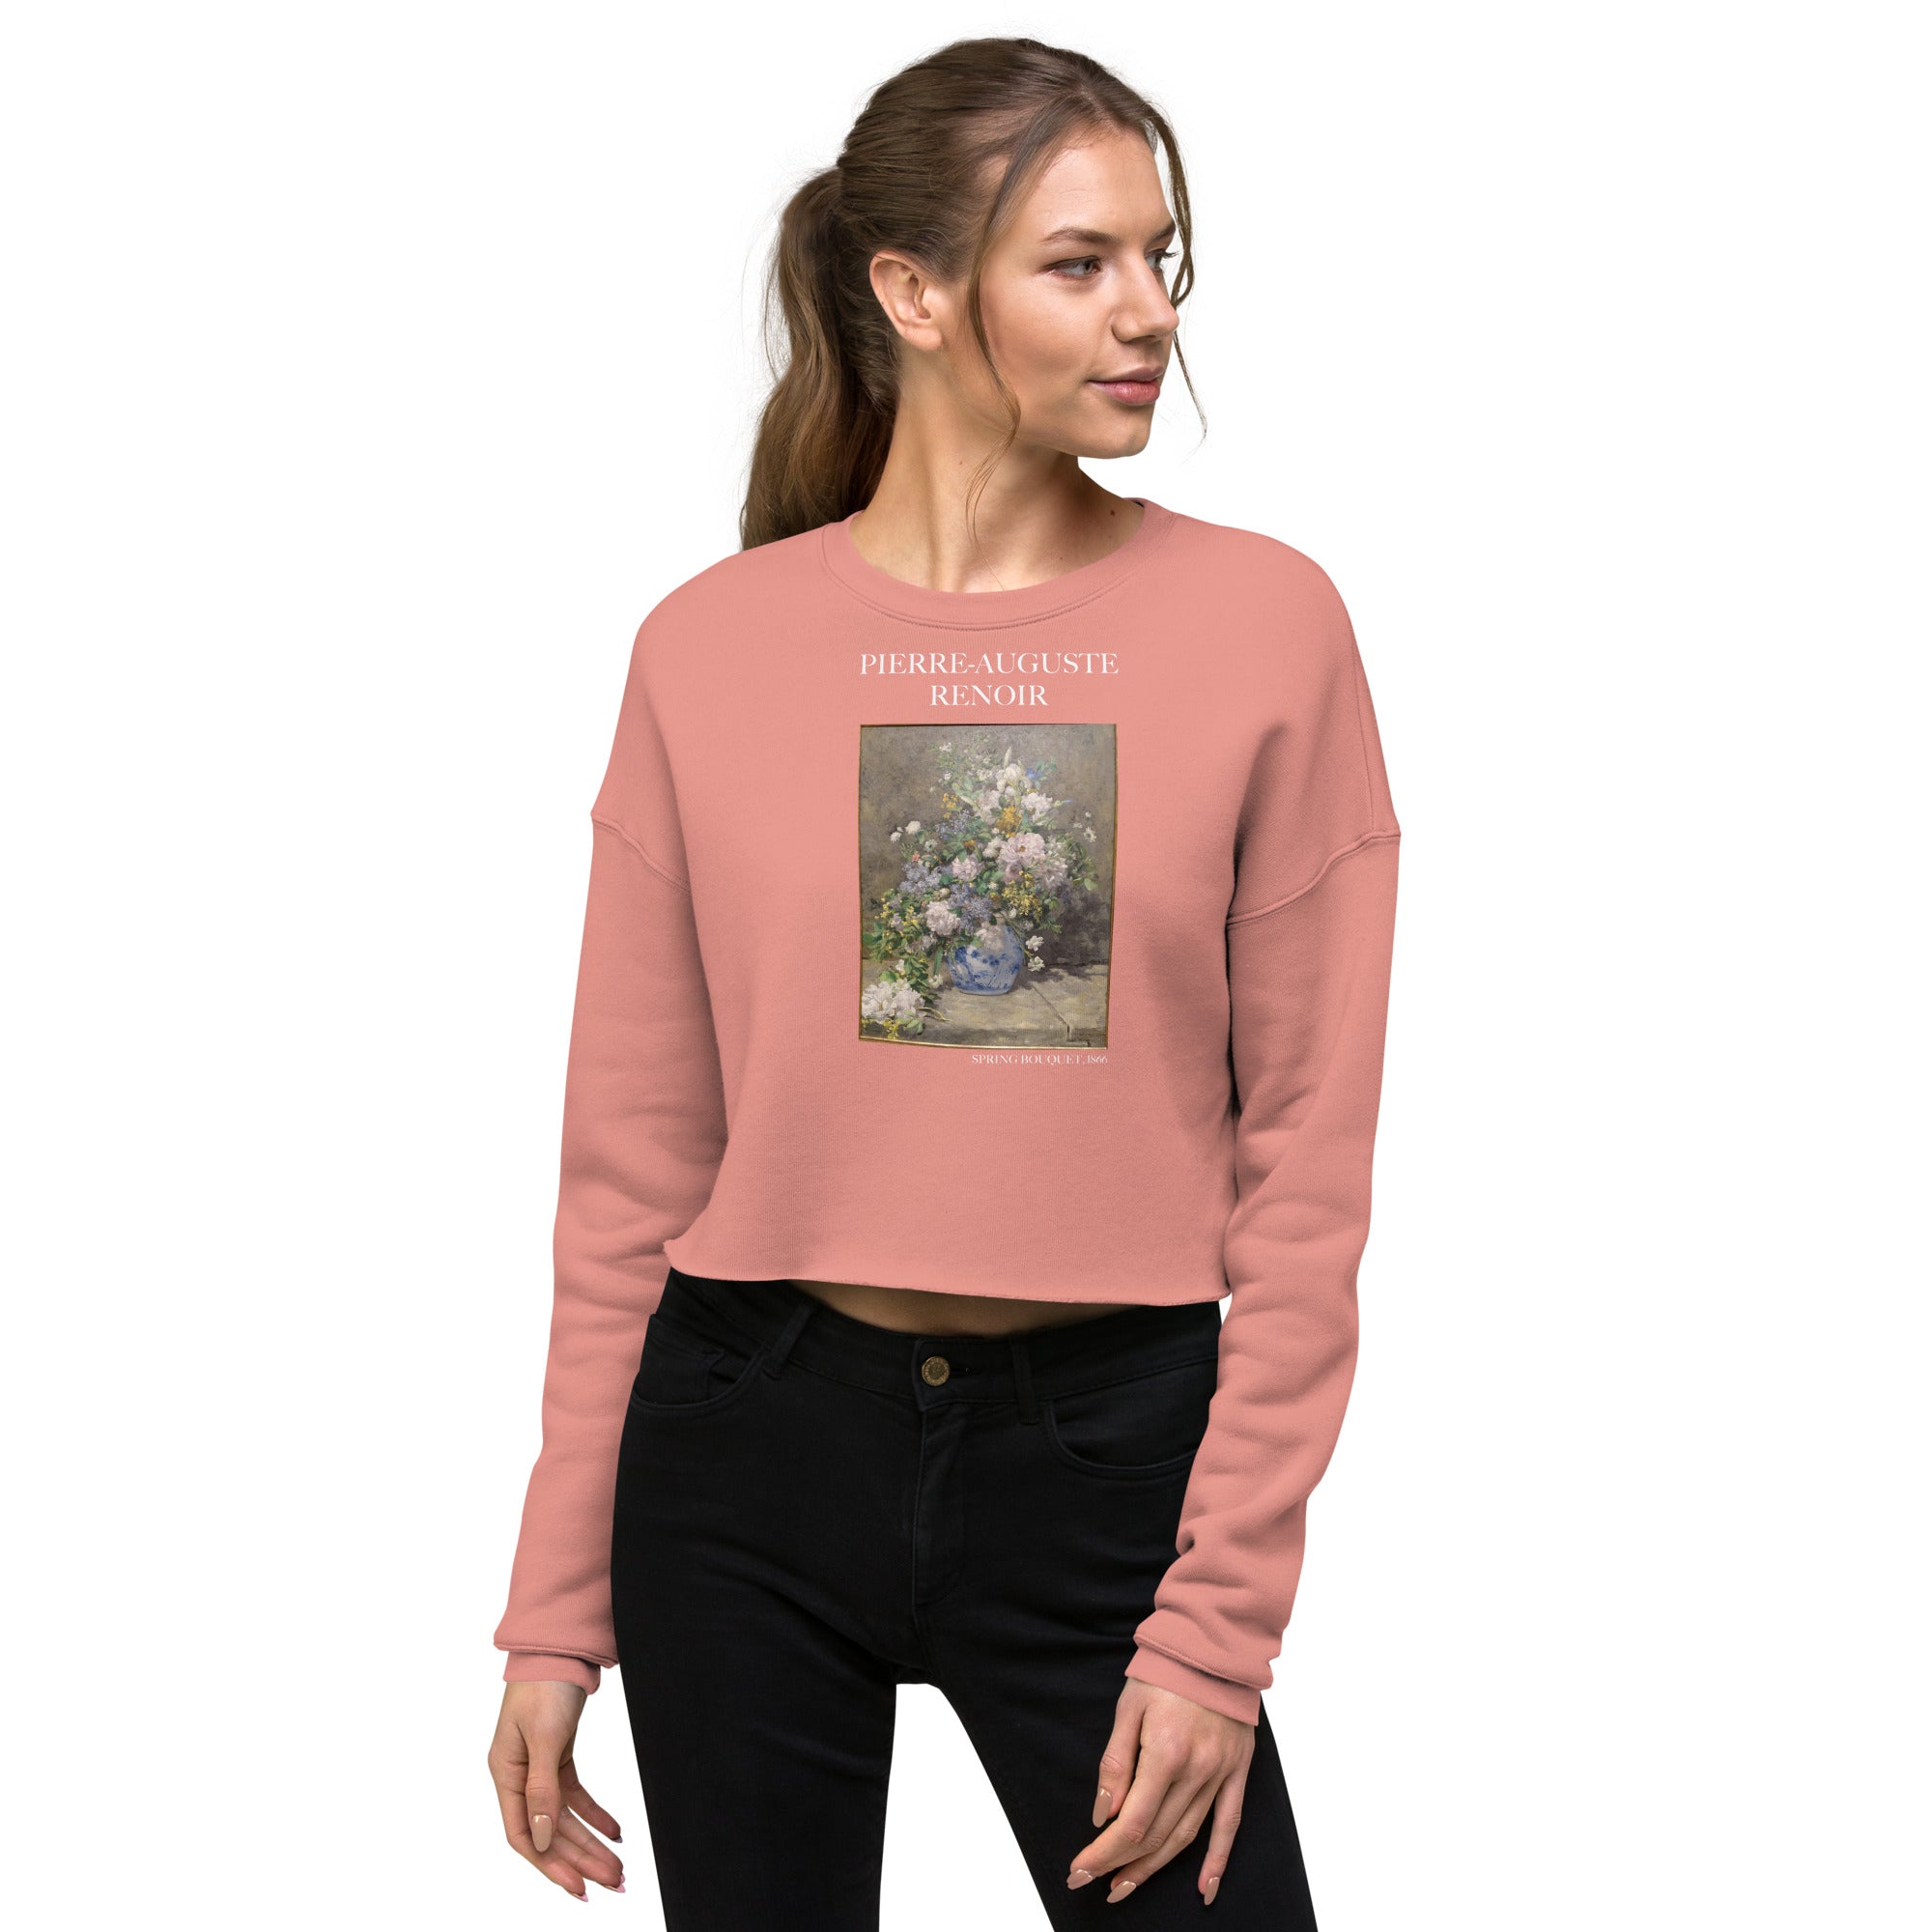 Pierre-Auguste Renoir 'Spring Bouquet' Famous Painting Cropped Sweatshirt | Premium Art Cropped Sweatshirt